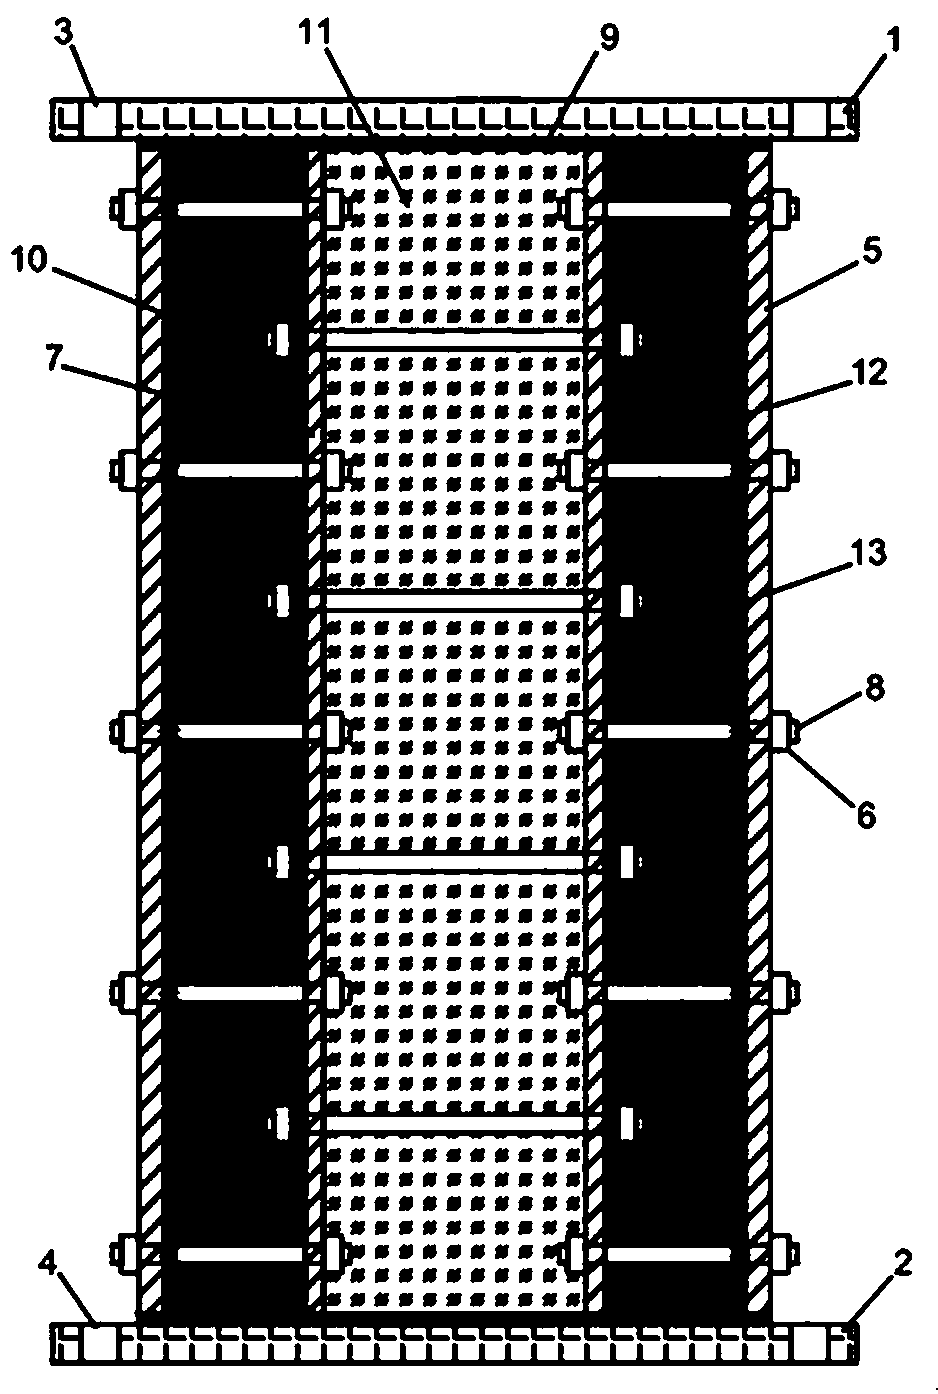 Waveform energy dissipation steel plate coordination type internal and external cylinder damper